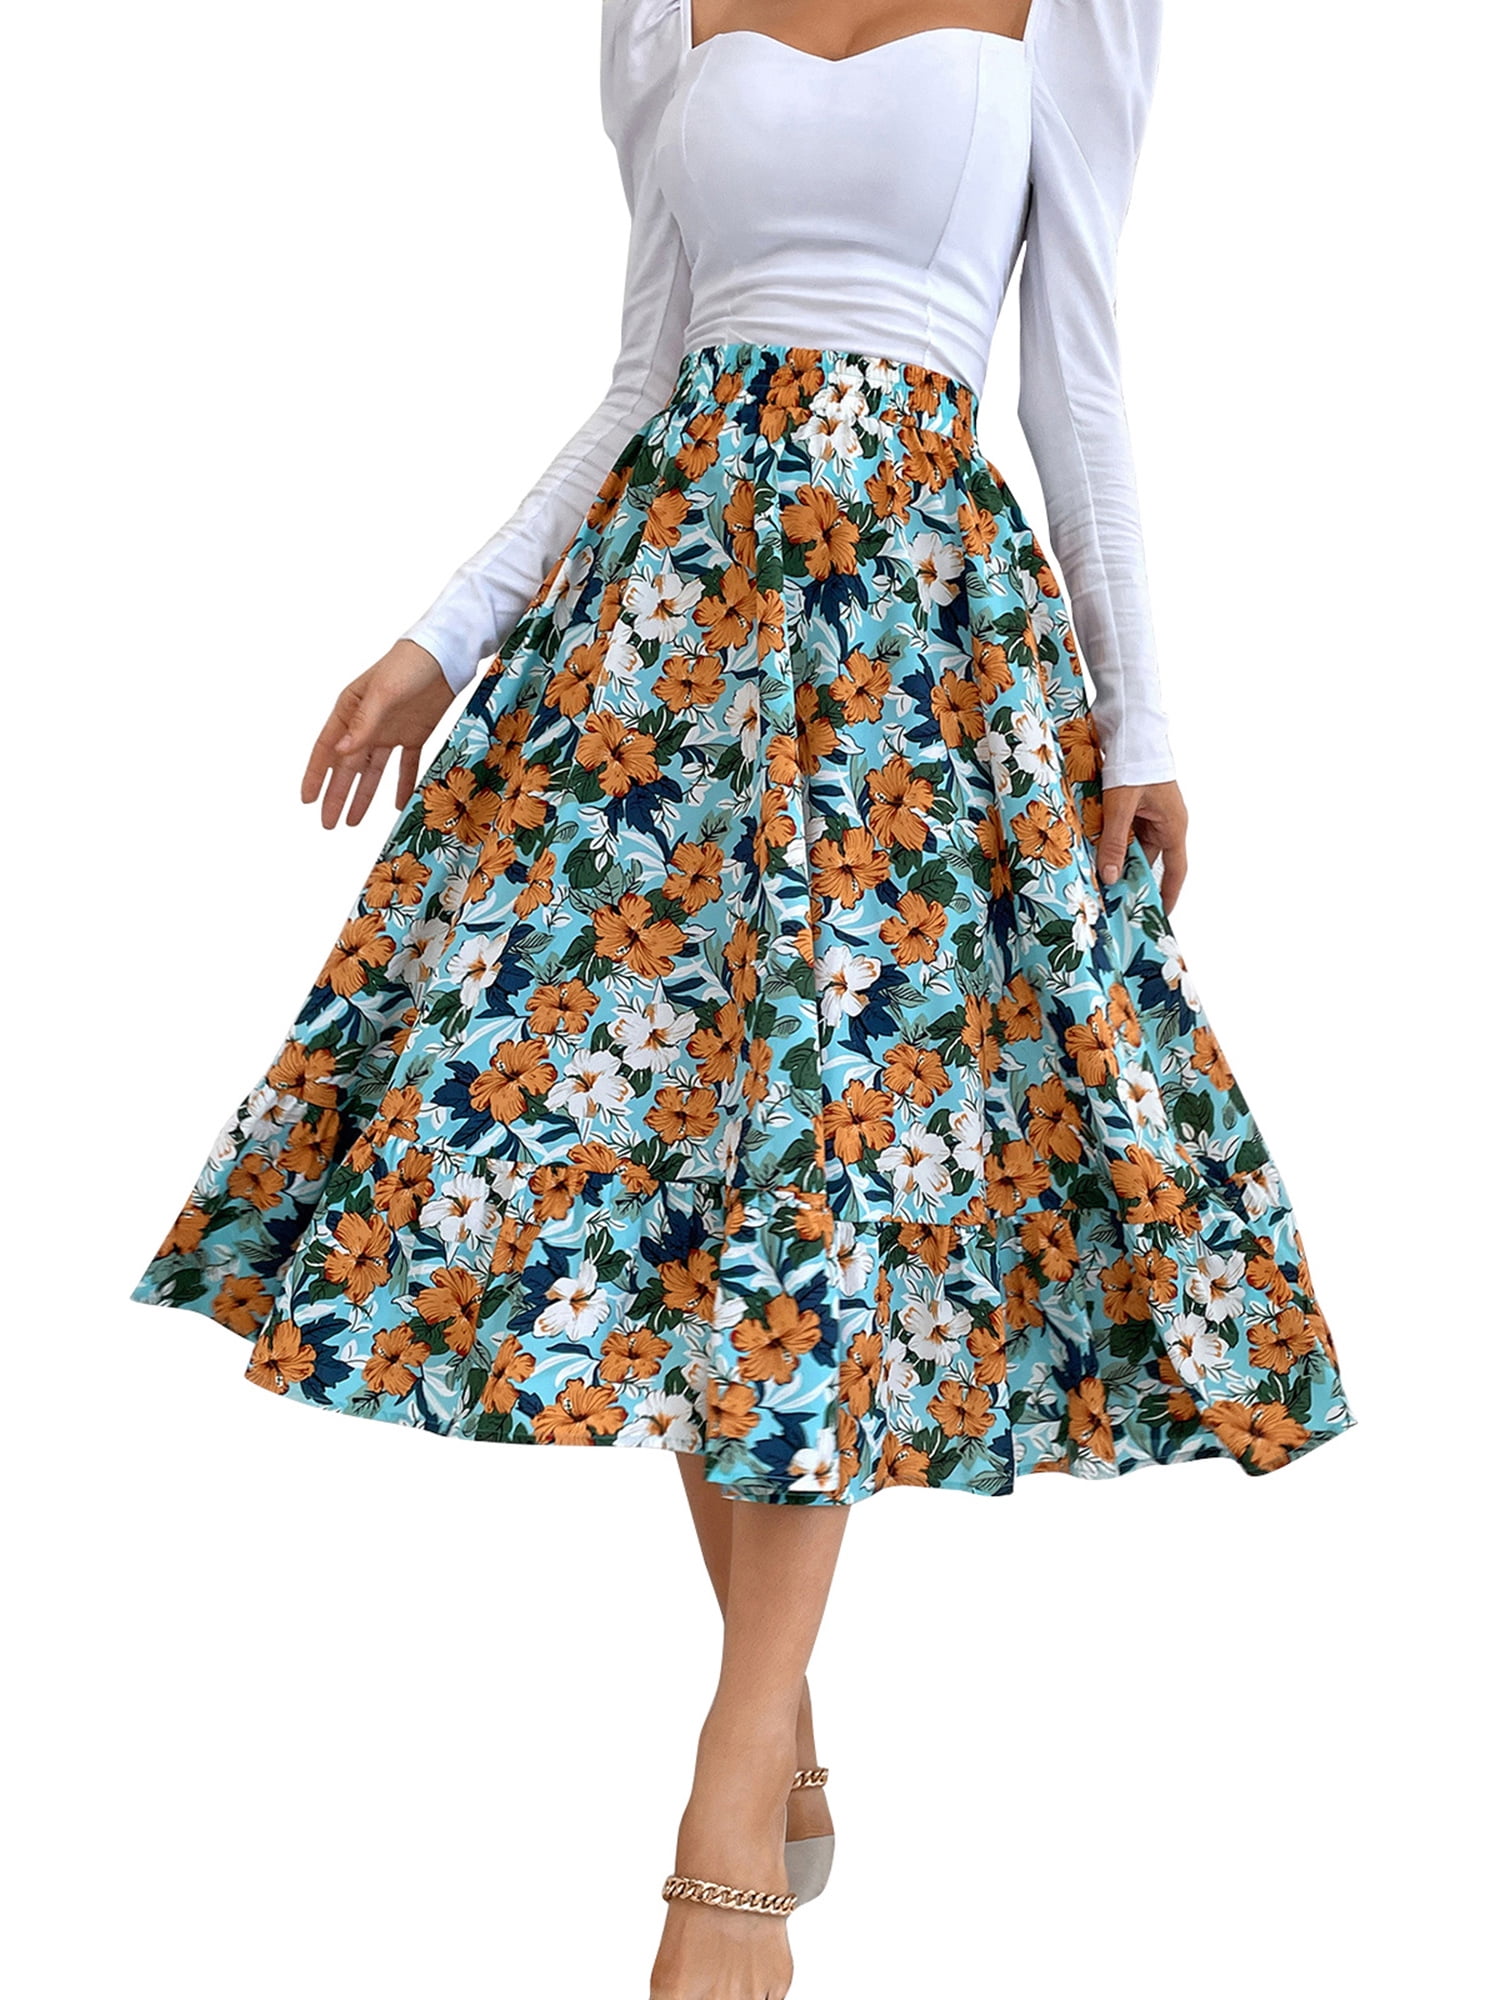 Flamingo High Waist Women Skirt Pleated Summer Dress Vintage 50s 60s Pattern